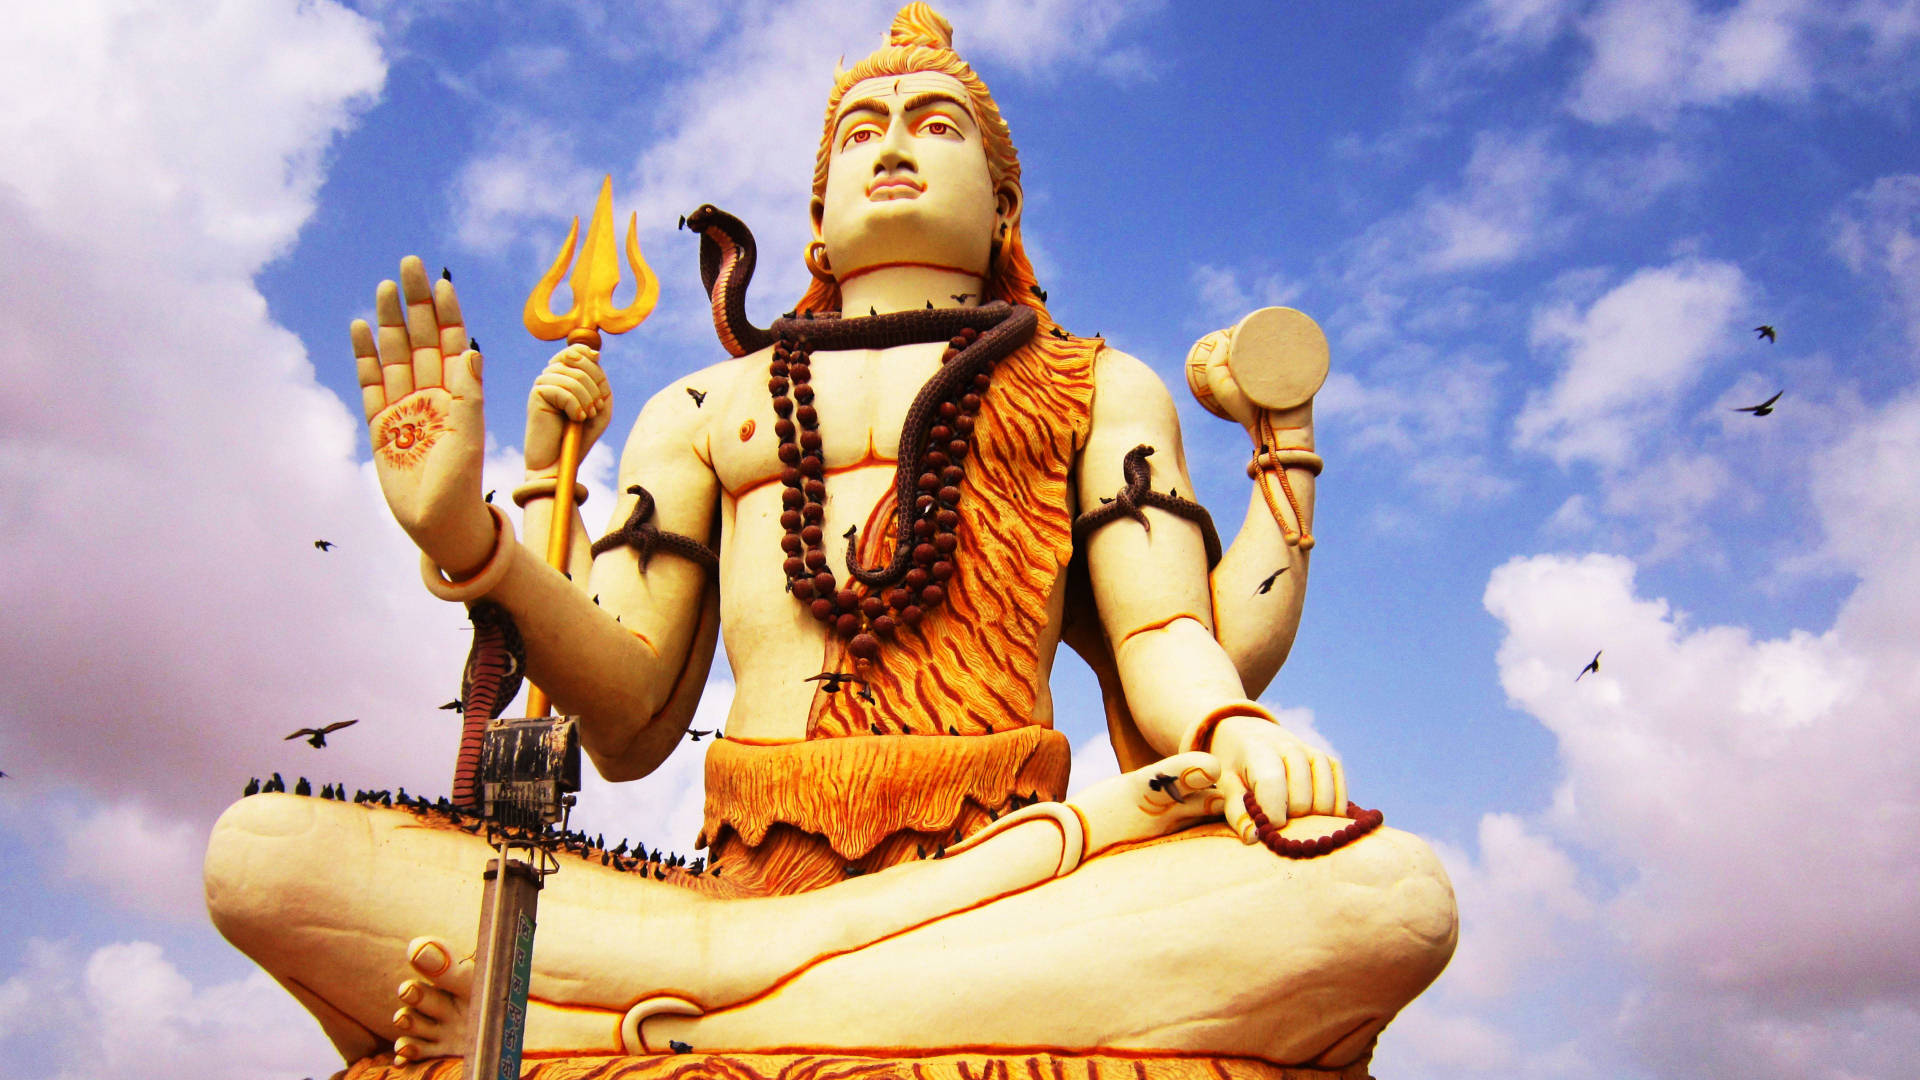 God Shiva Against A Cloudy Sky Wallpaper